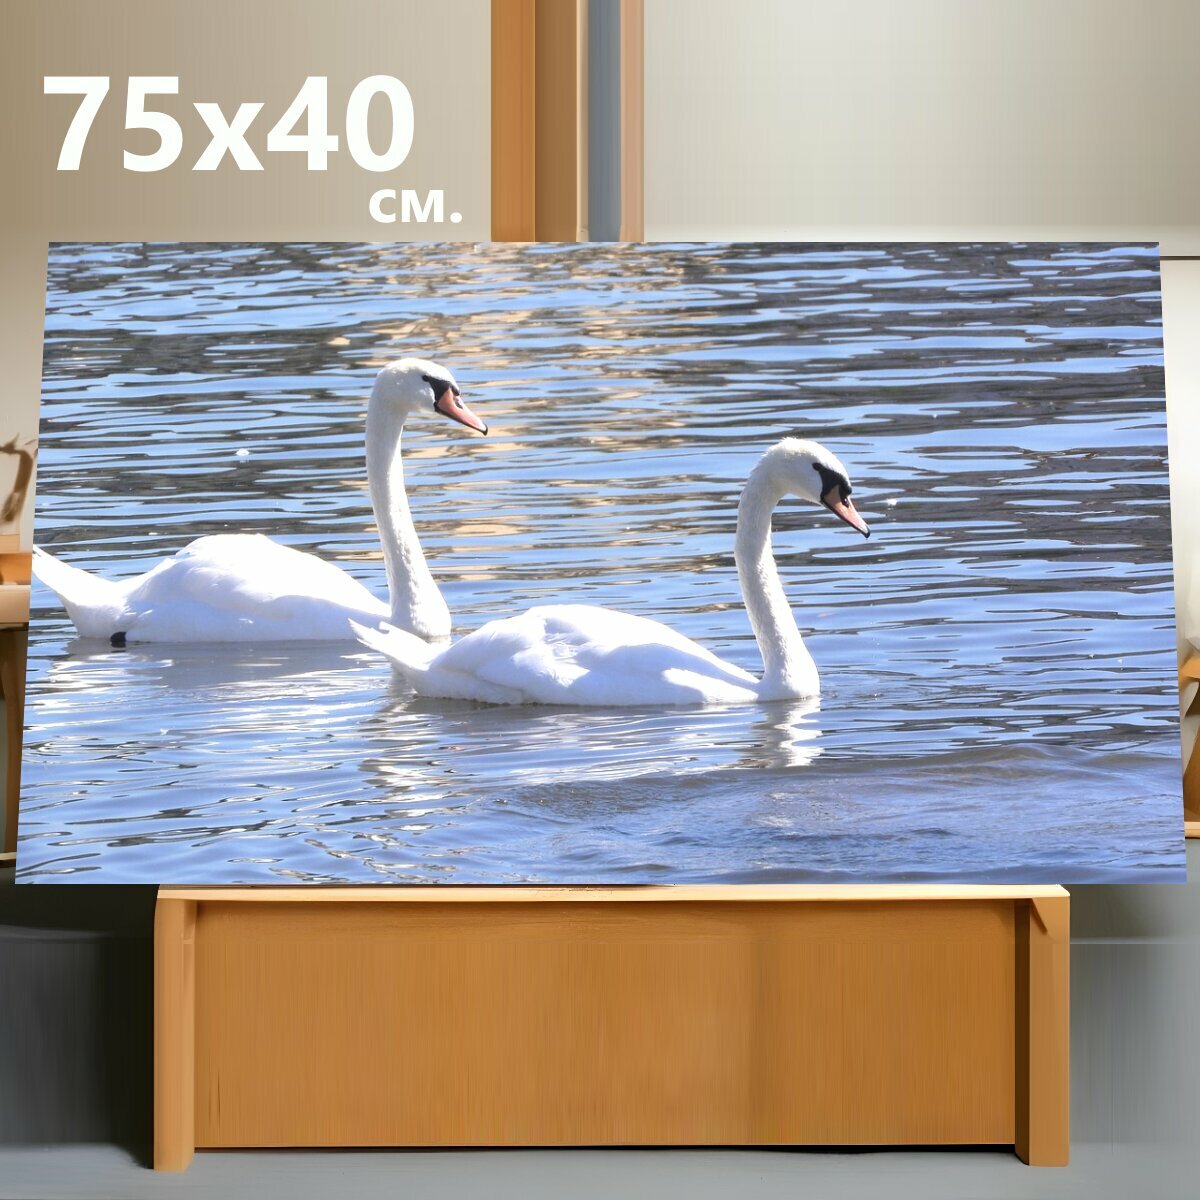 Картина на холсте "Лебеди, птицы, пруд" на подрамнике 75х40 см. для интерьера